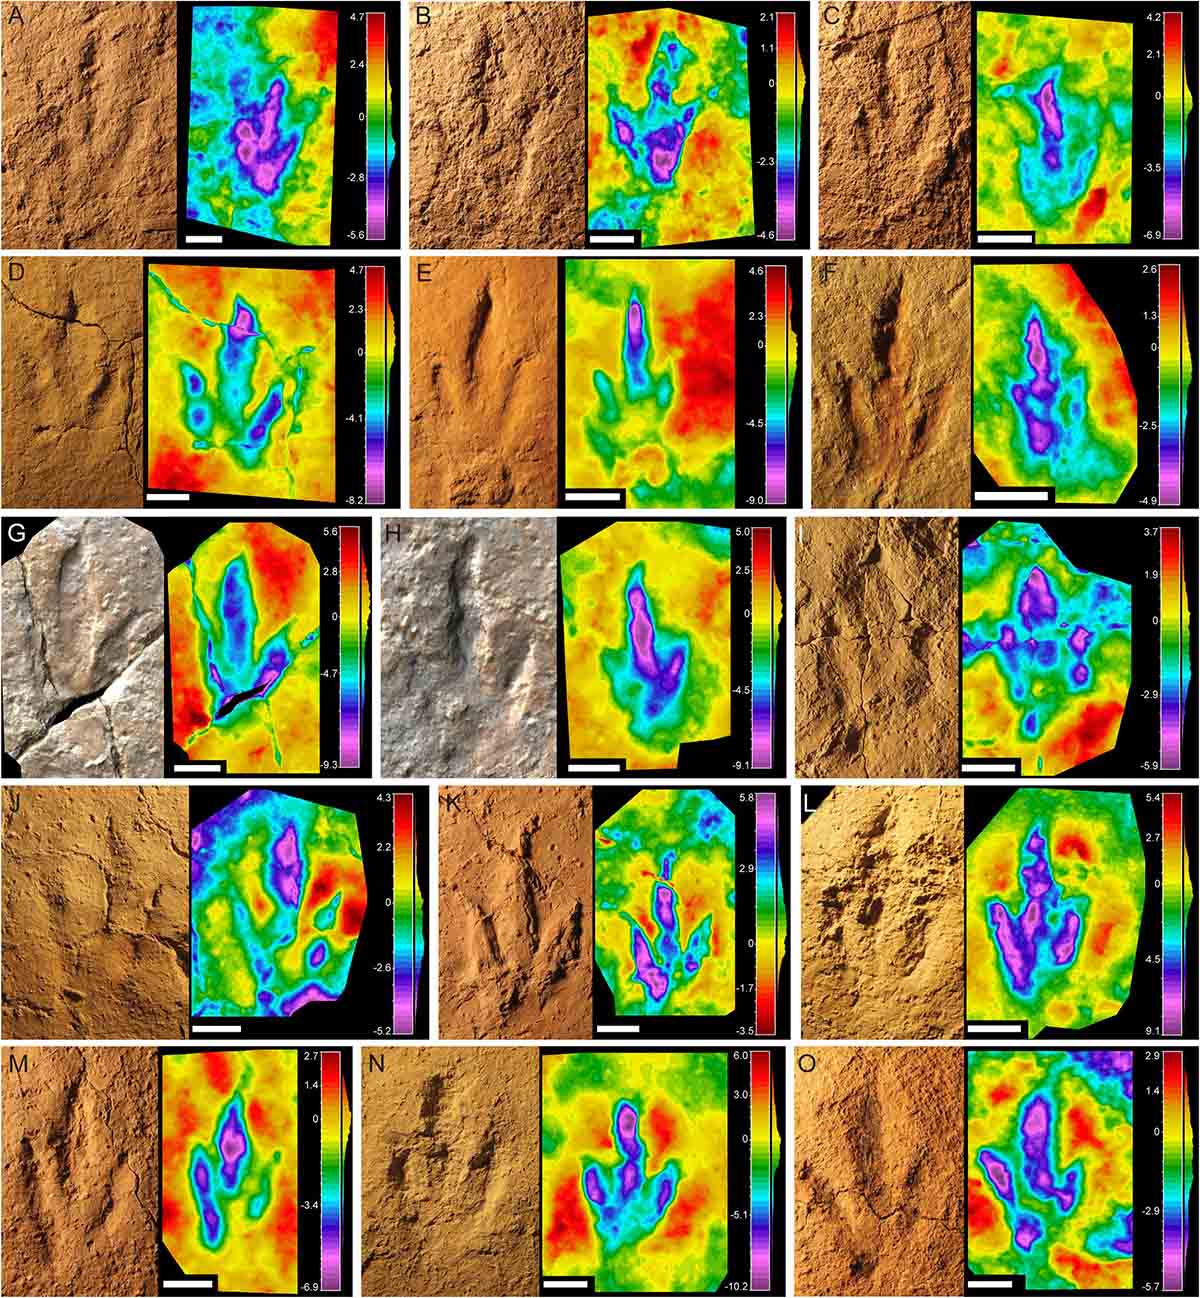 Variation in Late Jurassic tridactyl dinosaur tracks